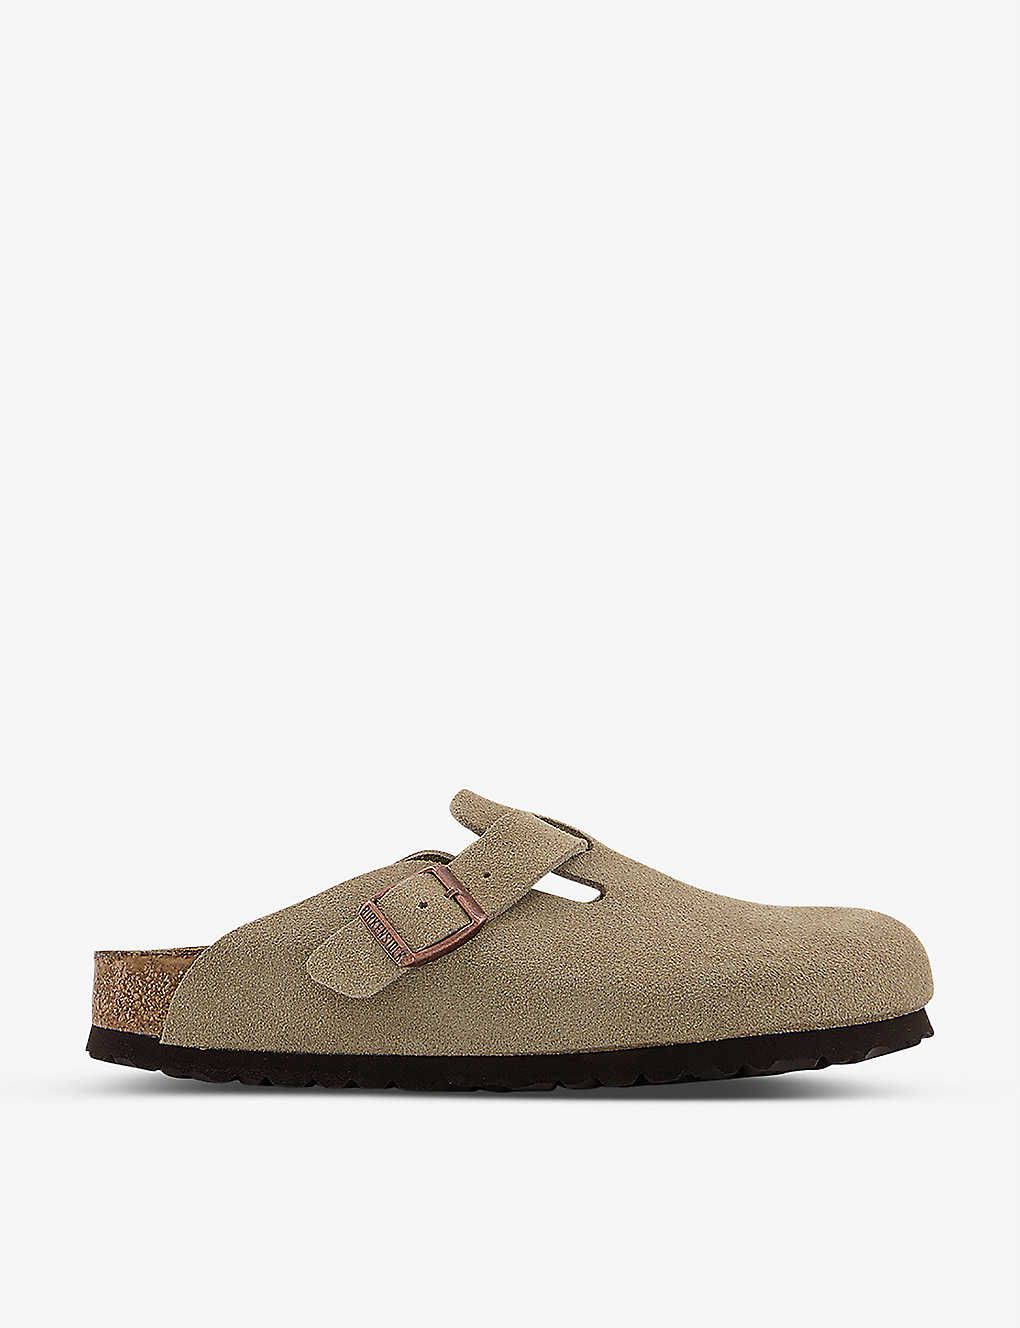 Boston buckle-embellished suede sandals | Selfridges